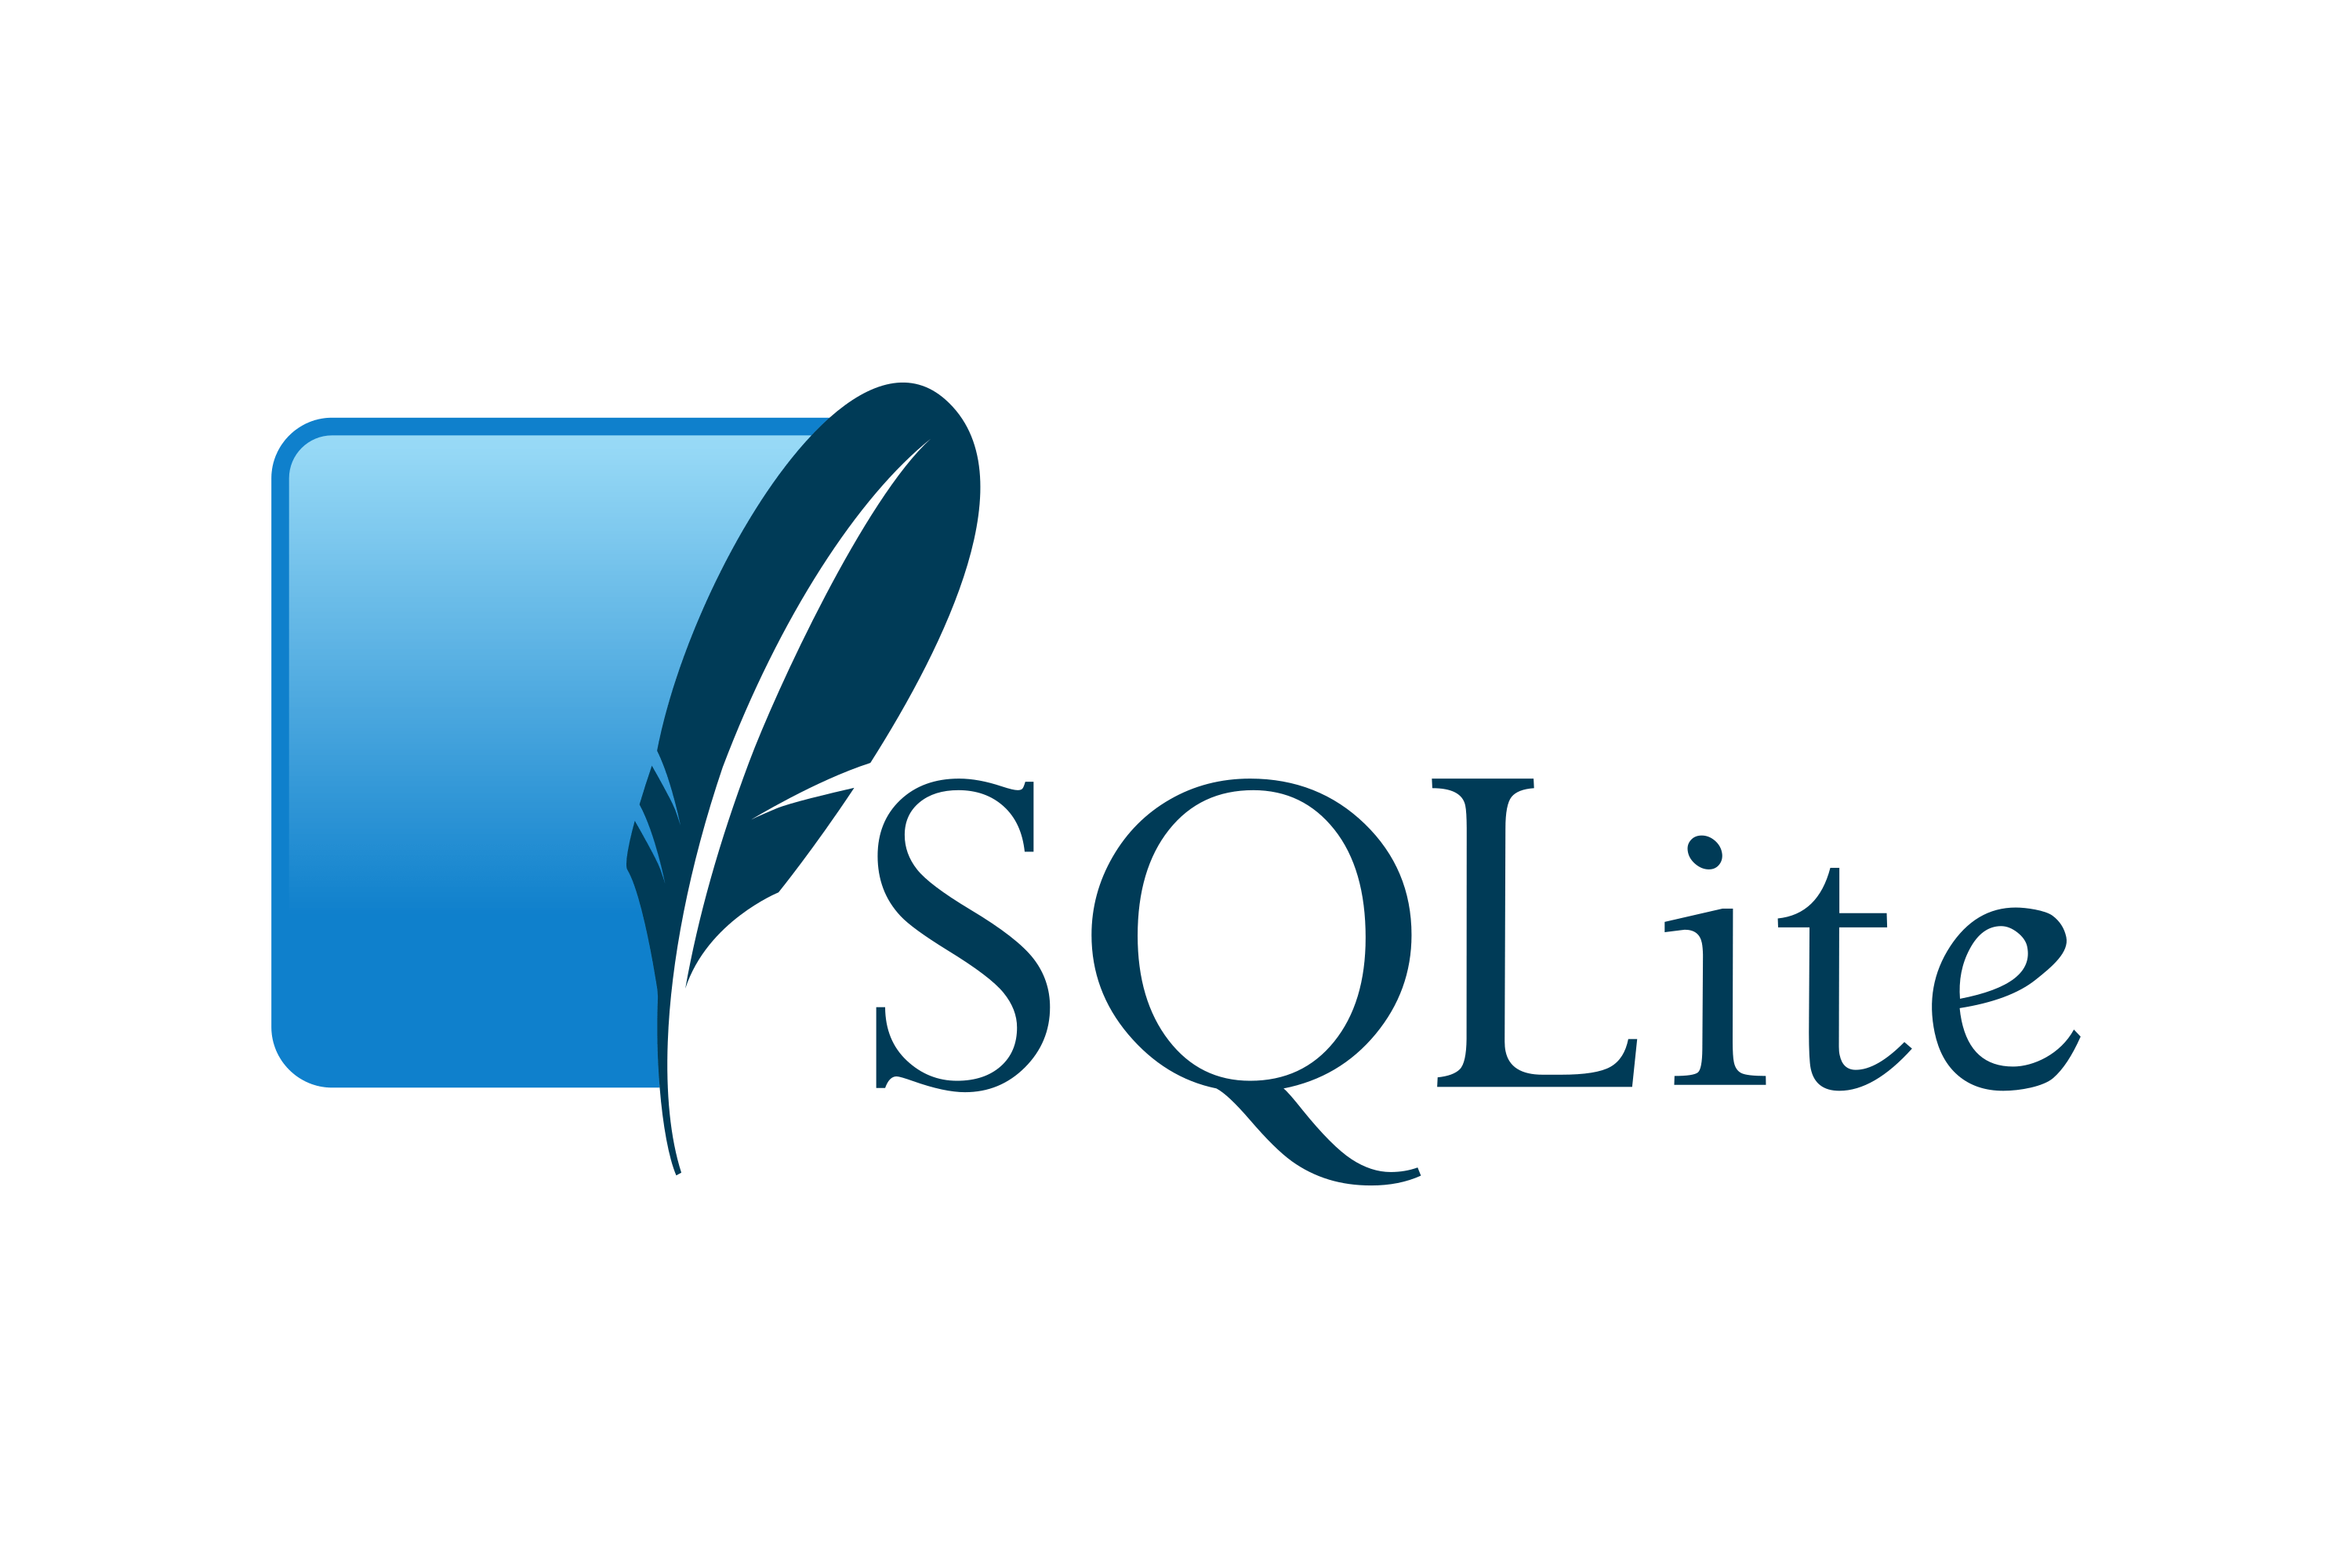 SQLite BigQuery: SQLite logo